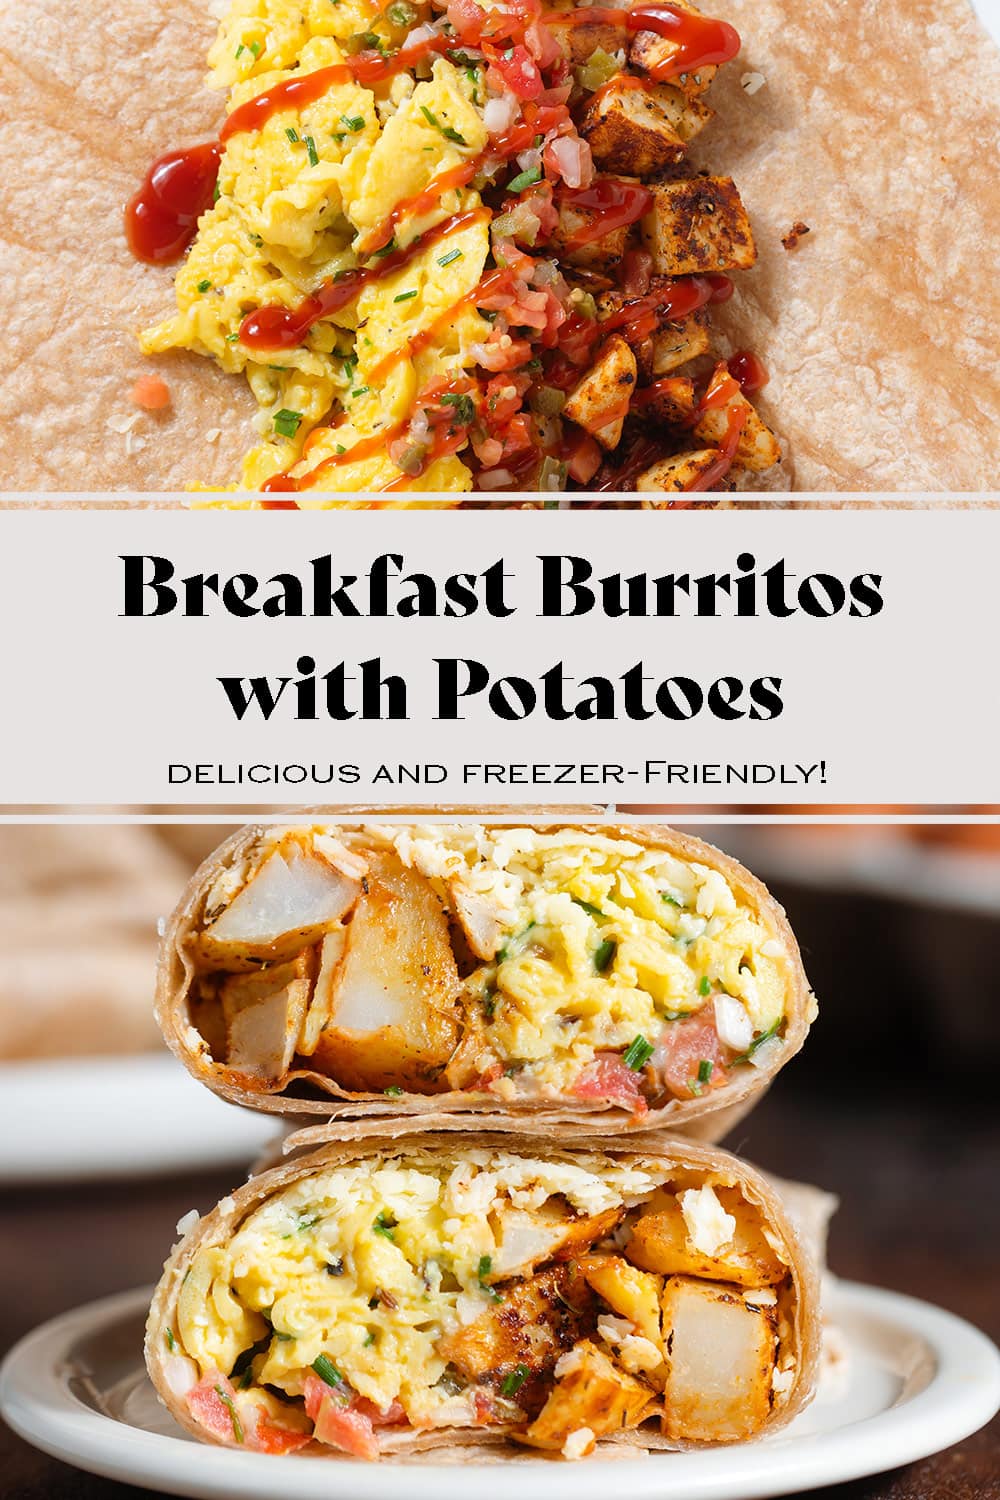 Breakfast Burritos with Potatoes